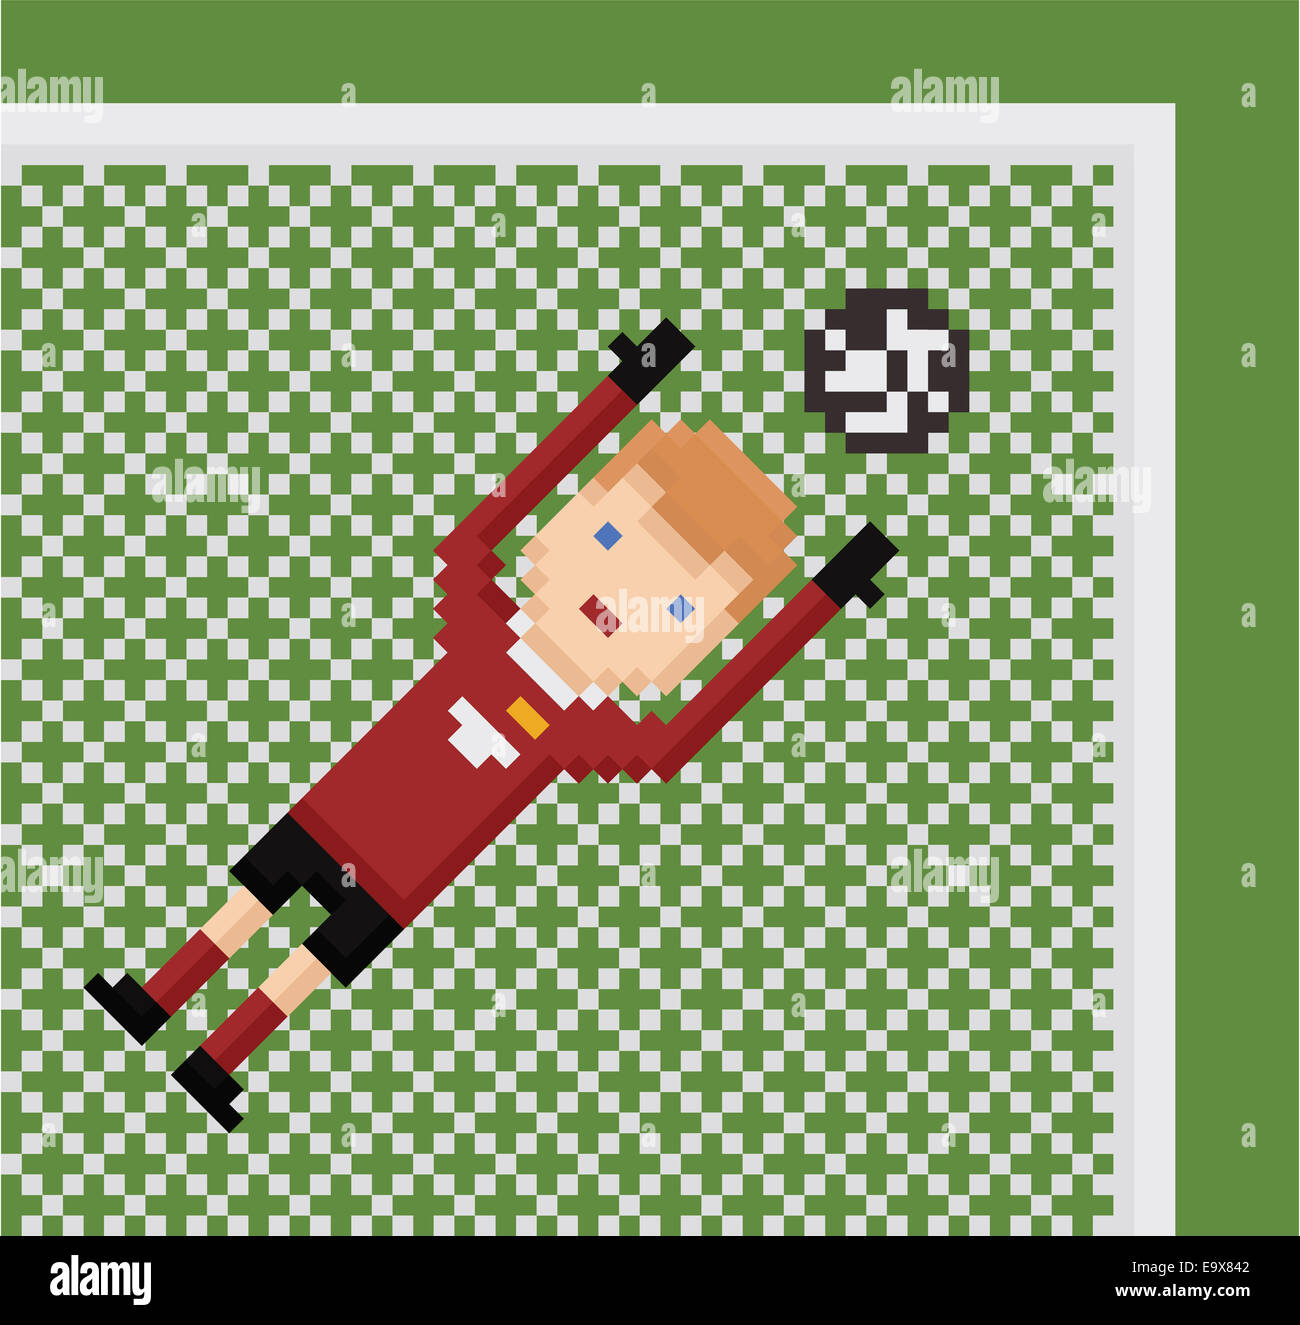 Pixel Art Abbildung Fußball Fußball-Torwart in roten Uniform fängt den Ball grün Hintergrund Stockfoto